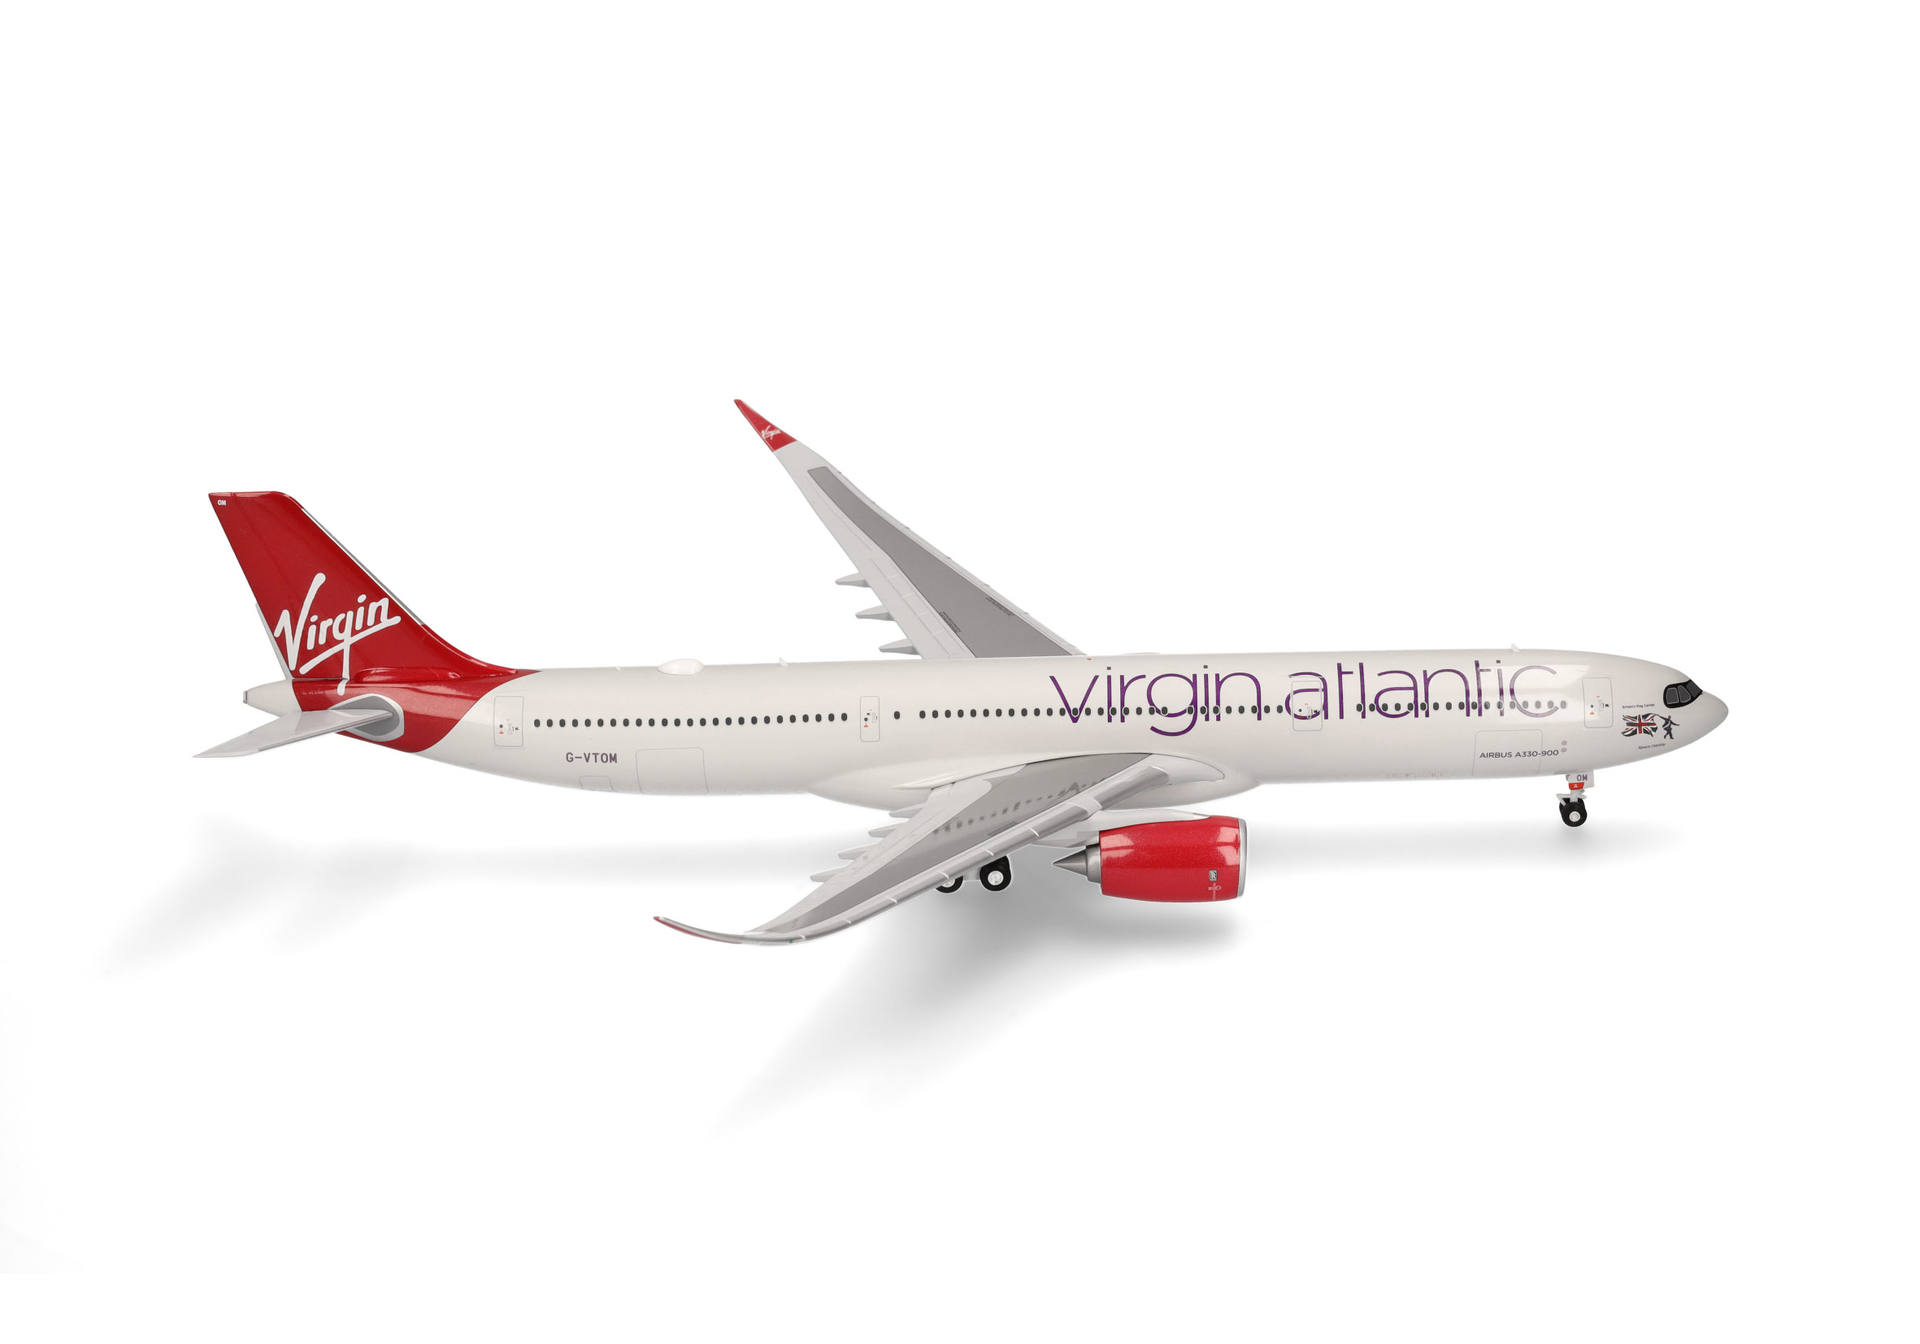 Virgin Atlantic Airbus A330-900neo